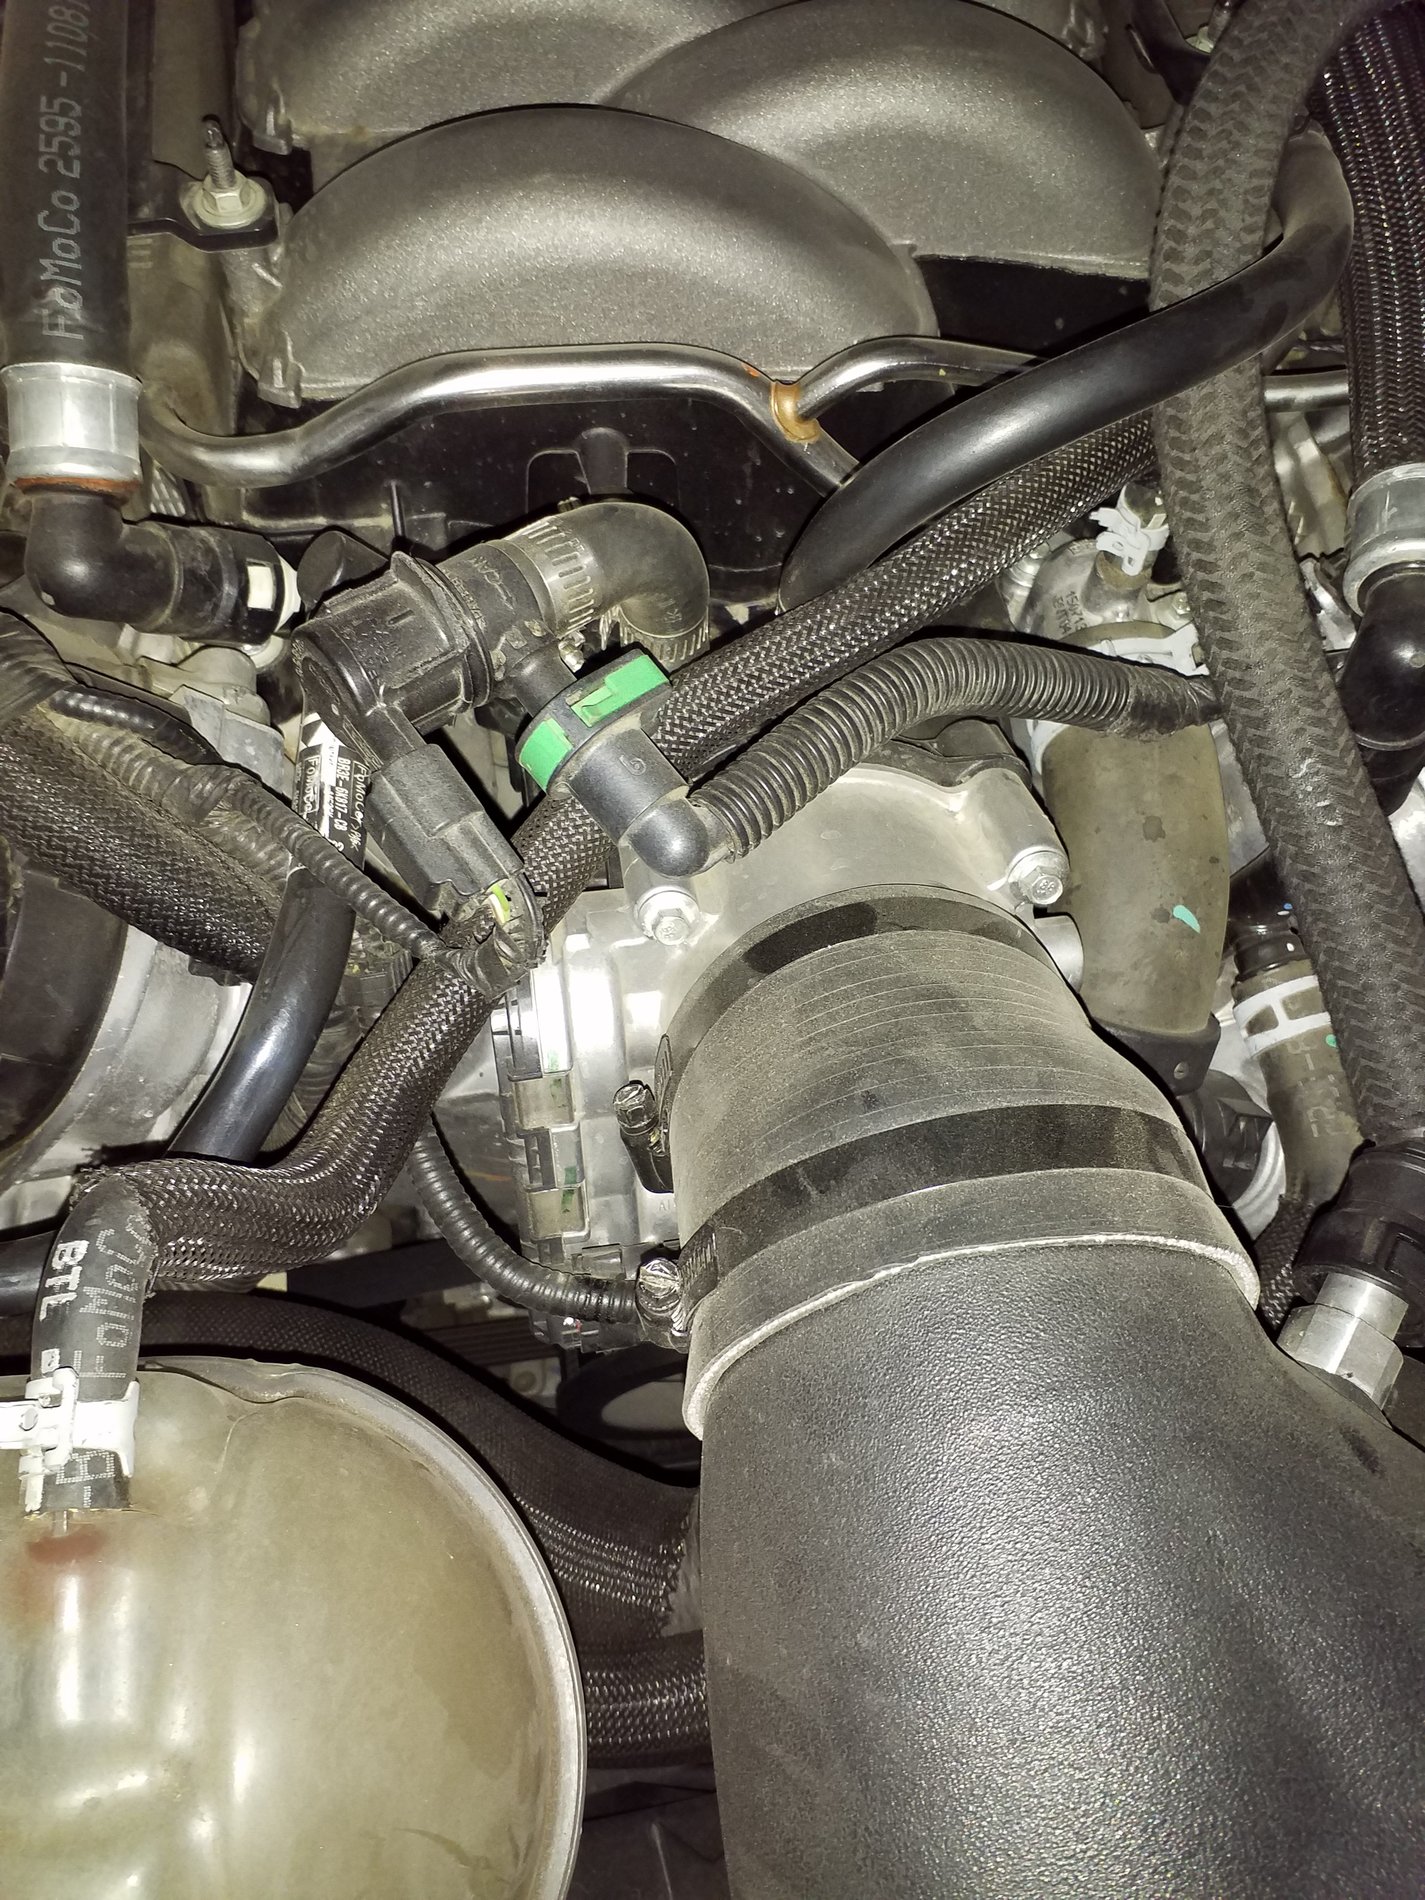 2018 intake manifold help | 2015+ S550 Mustang Forum (GT, EcoBoost 5.7 Hemi Oil Leak Under Intake Manifold